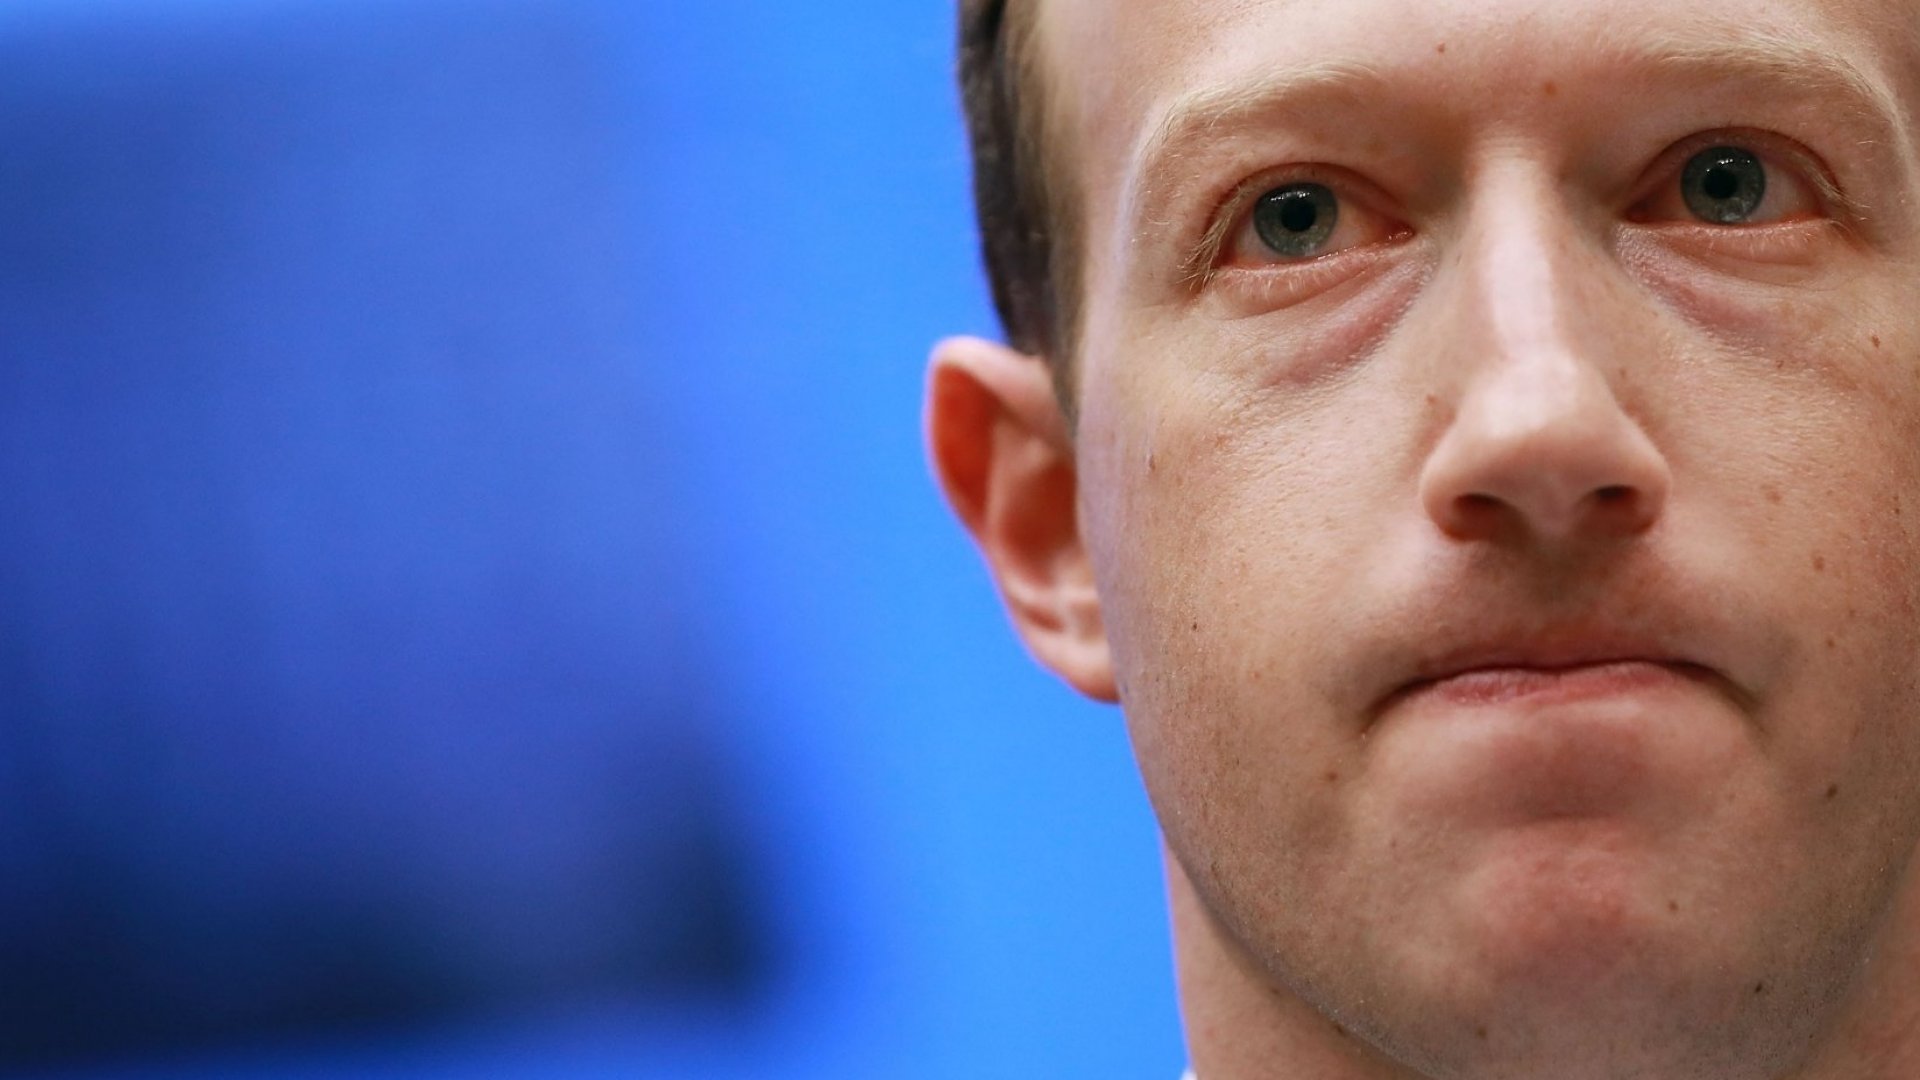 mark zuckerberg mat ca nui tien lan dau tien phai dong cua van phong facebook tai new york hinh 1